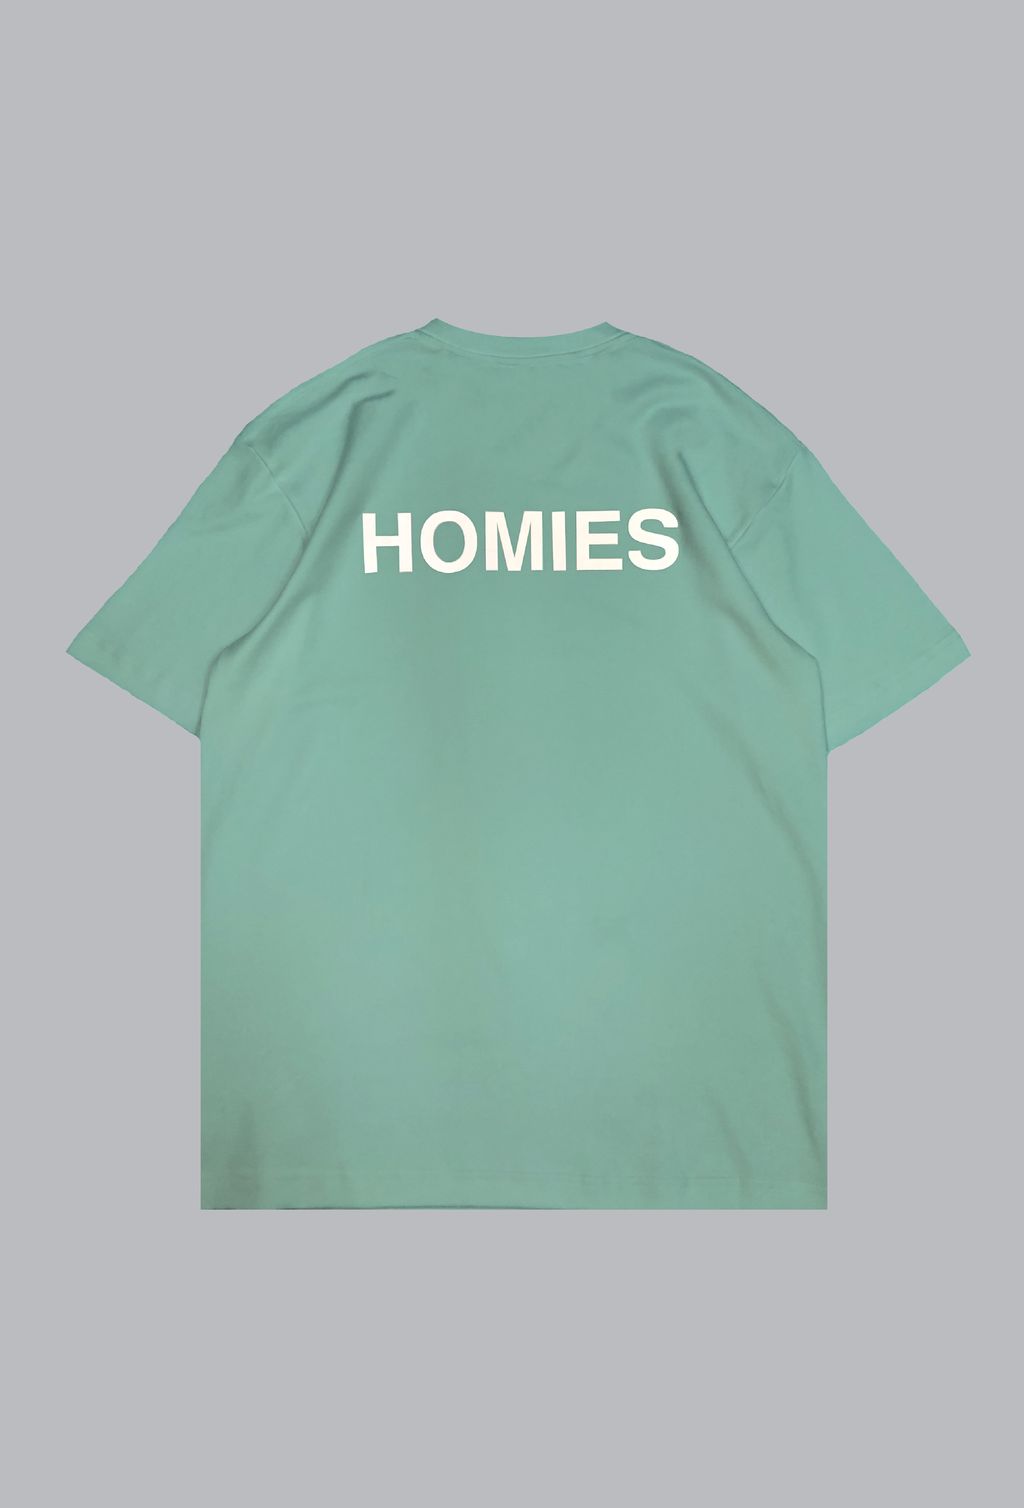 homies mint back-01.jpg